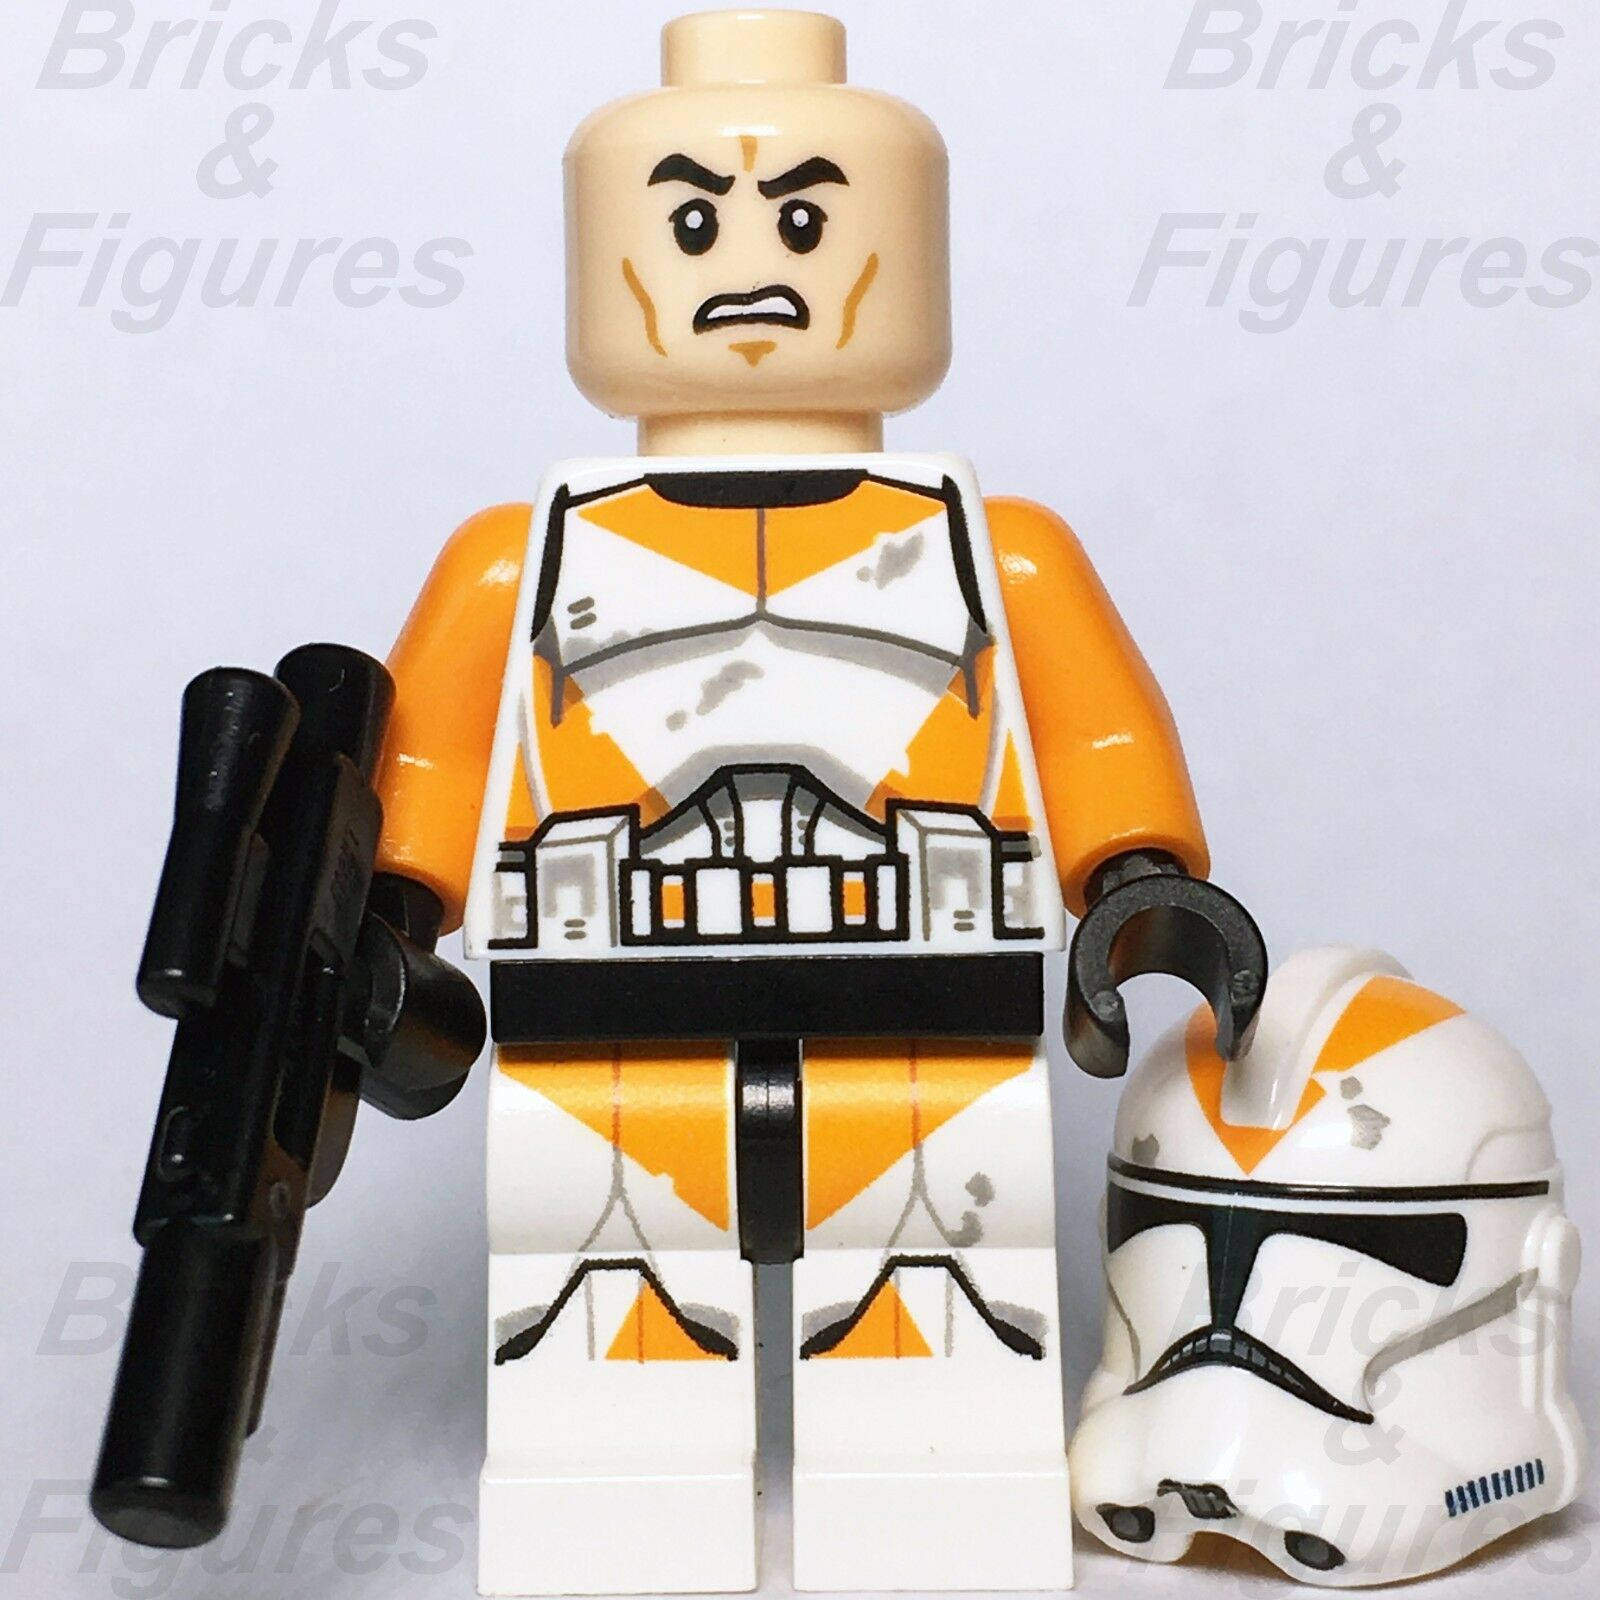 New Star Wars LEGO 212th Battalion Utapau Clone Trooper Minifigure 75036 - Bricks & Figures